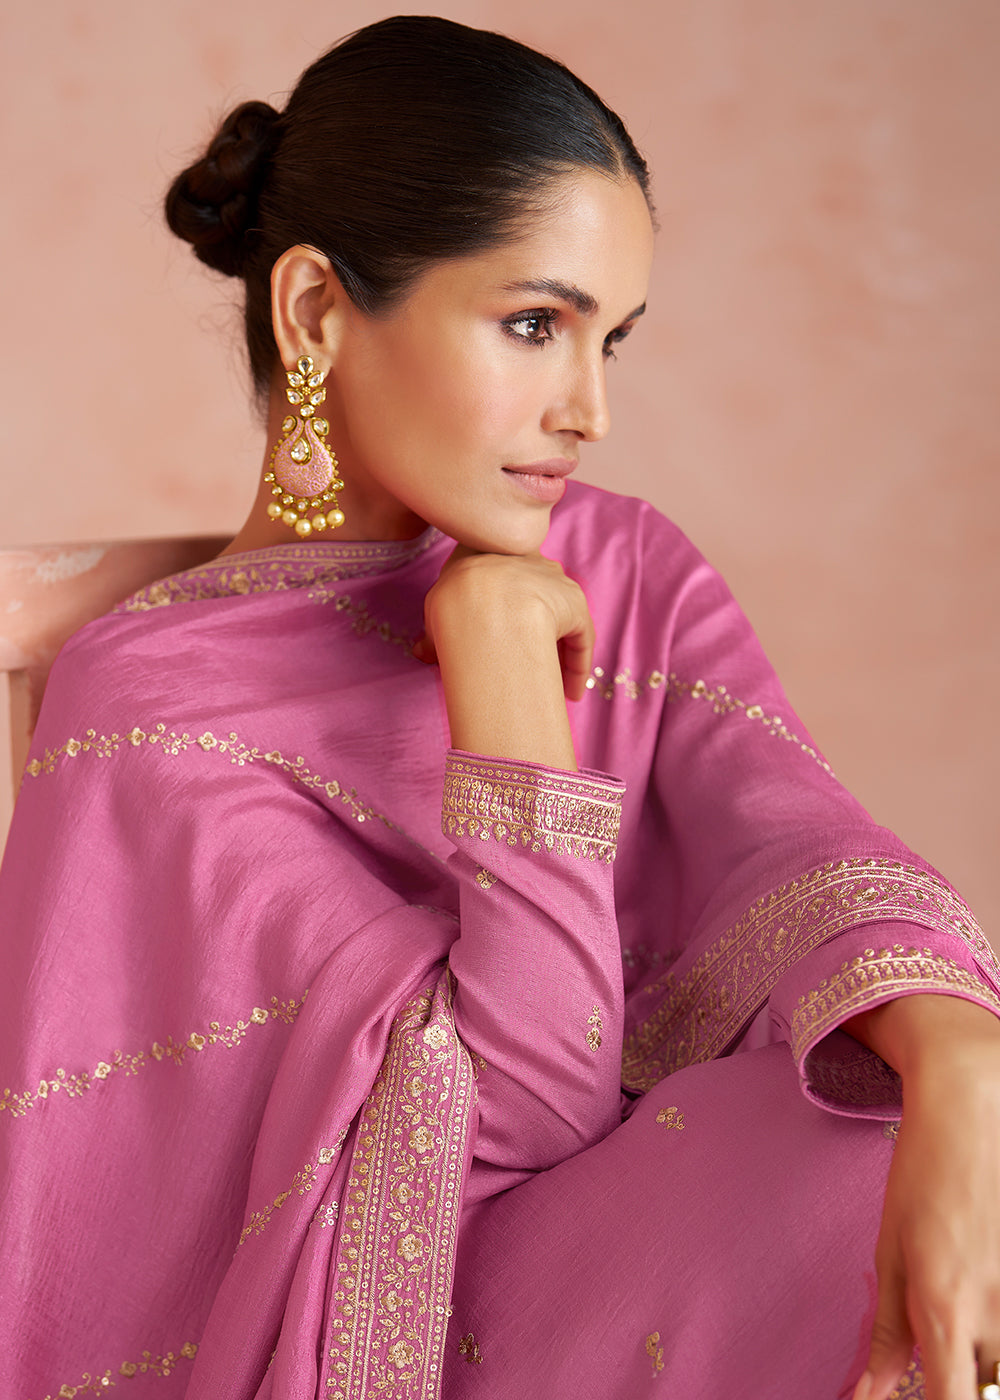 Buy Now Elegant Soft Pink Silk Embroidered Palazzo Salwar Kameez Online in USA, UK, Canada, Germany, Australia & Worldwide at Empress Clothing.